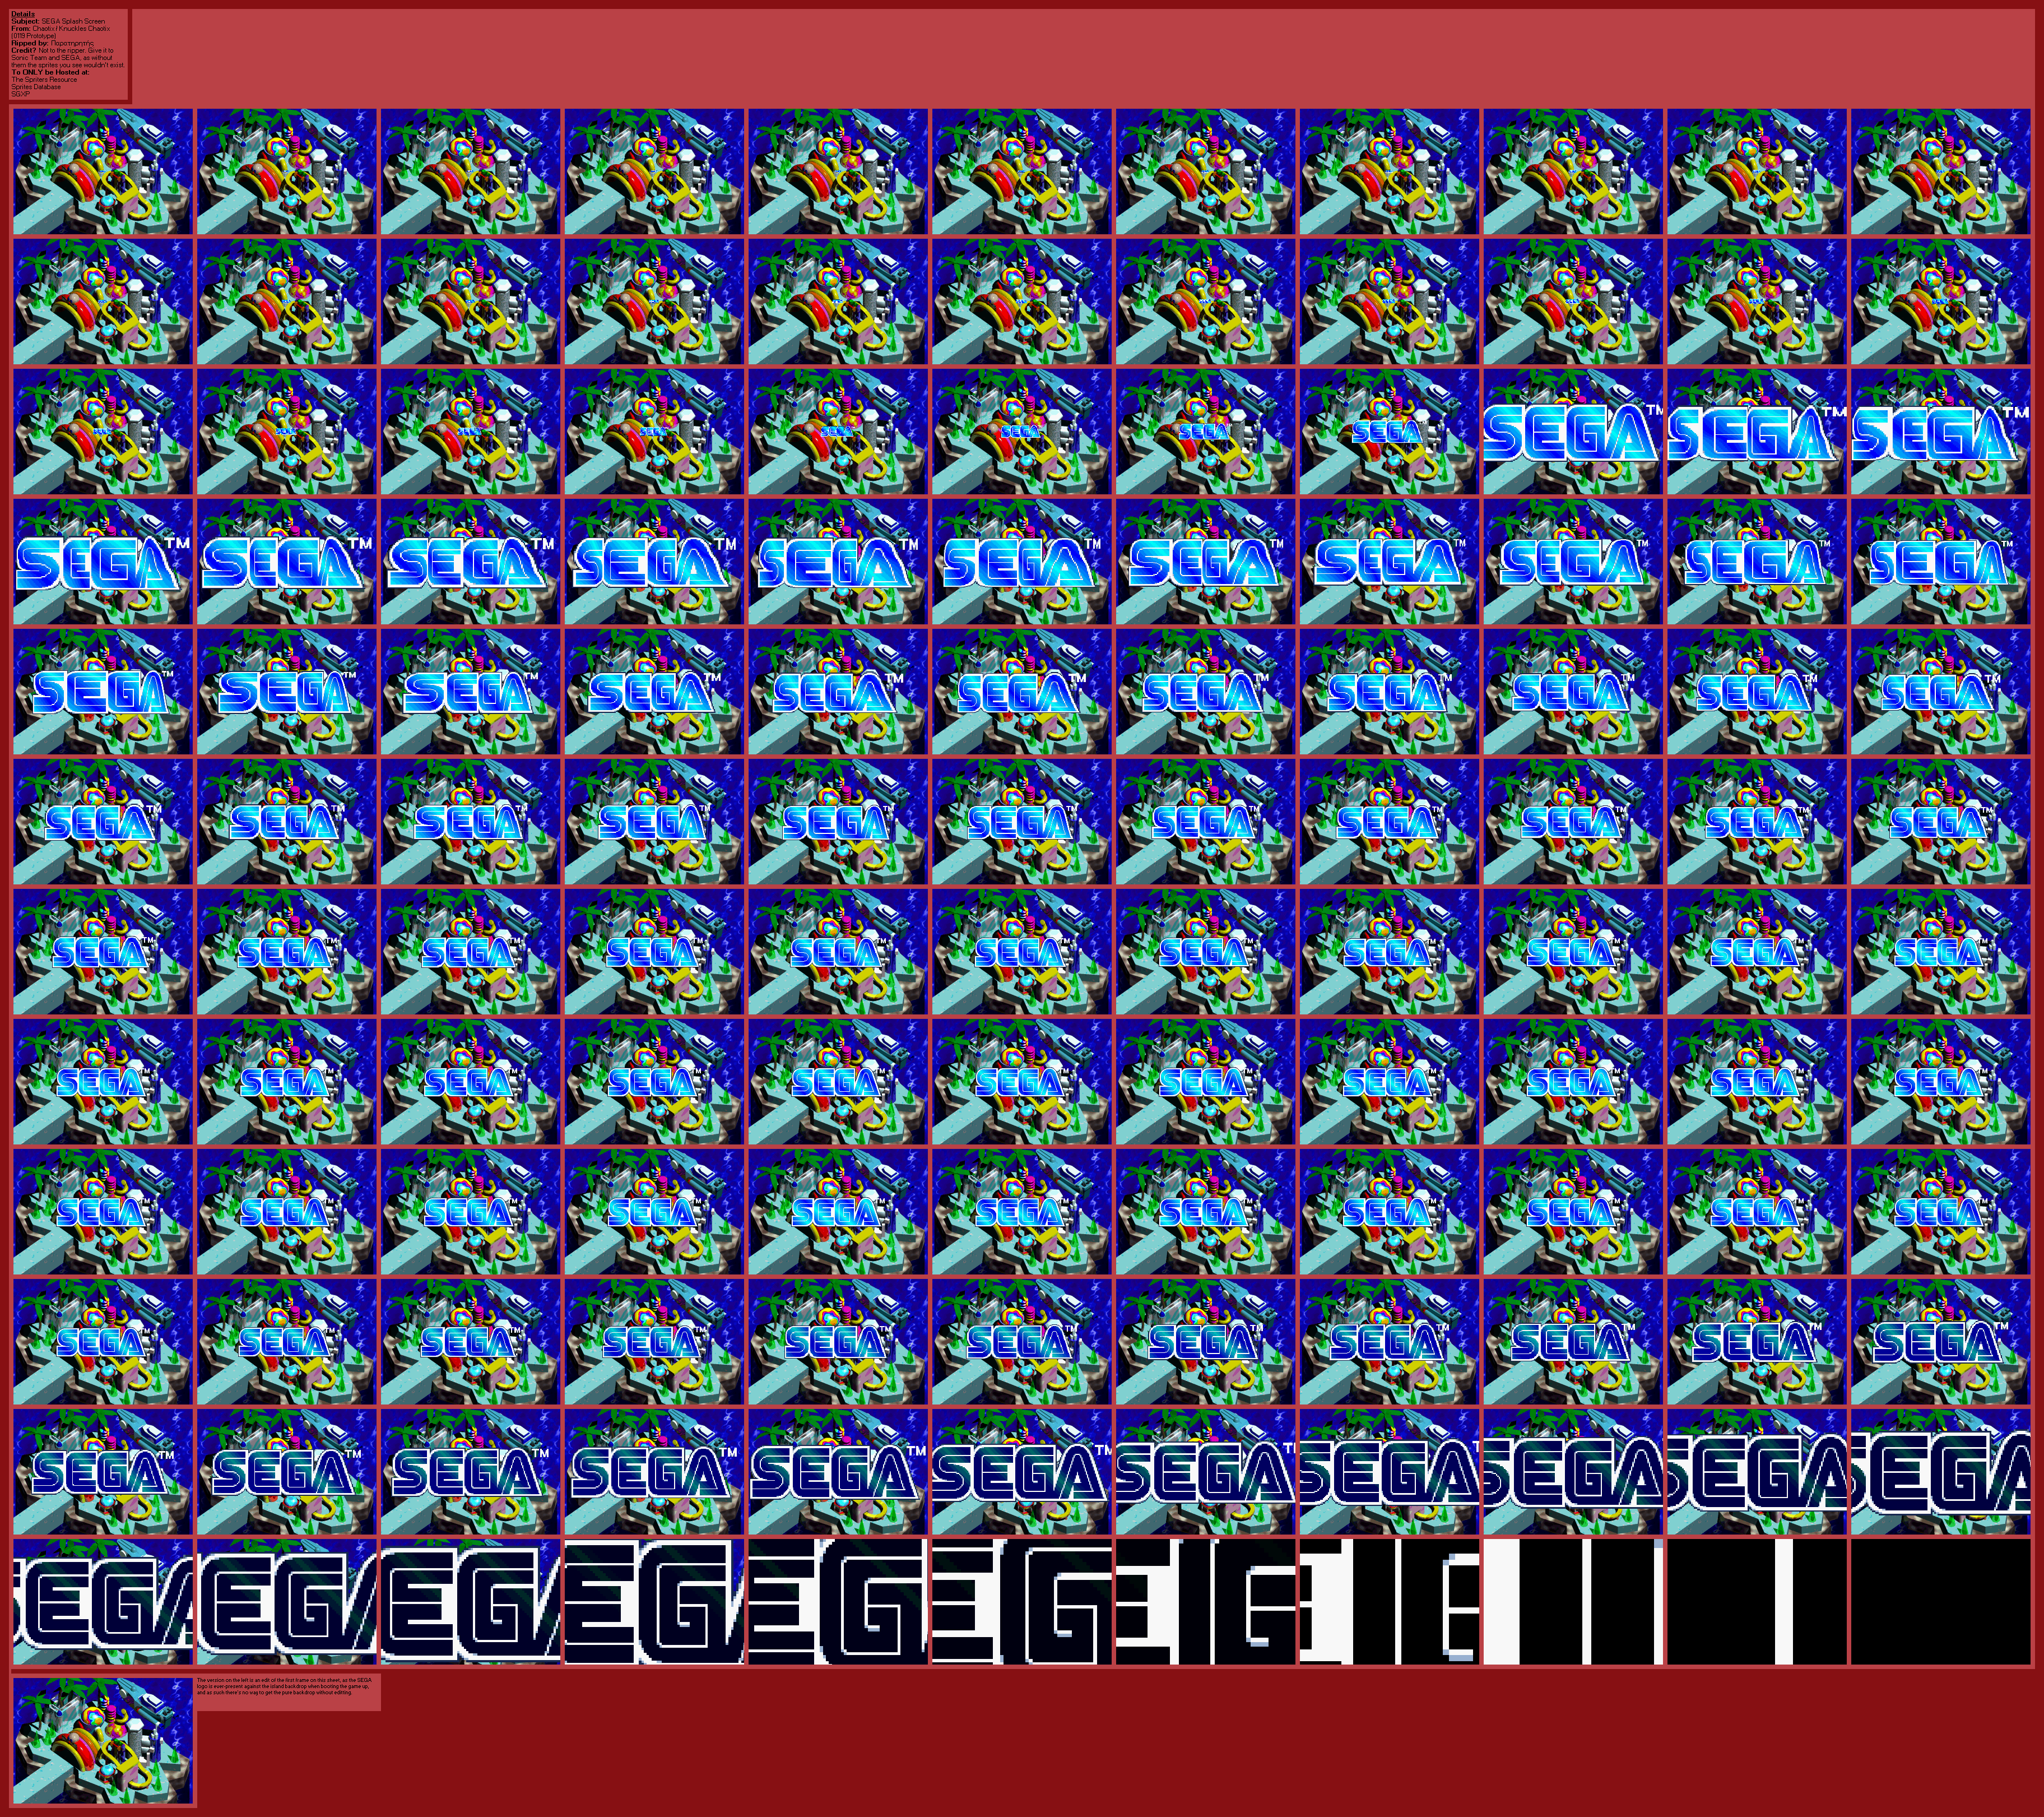 Knuckles' Chaotix Sprite Sheets - Sega Genesis 32X - Sonic Galaxy.net